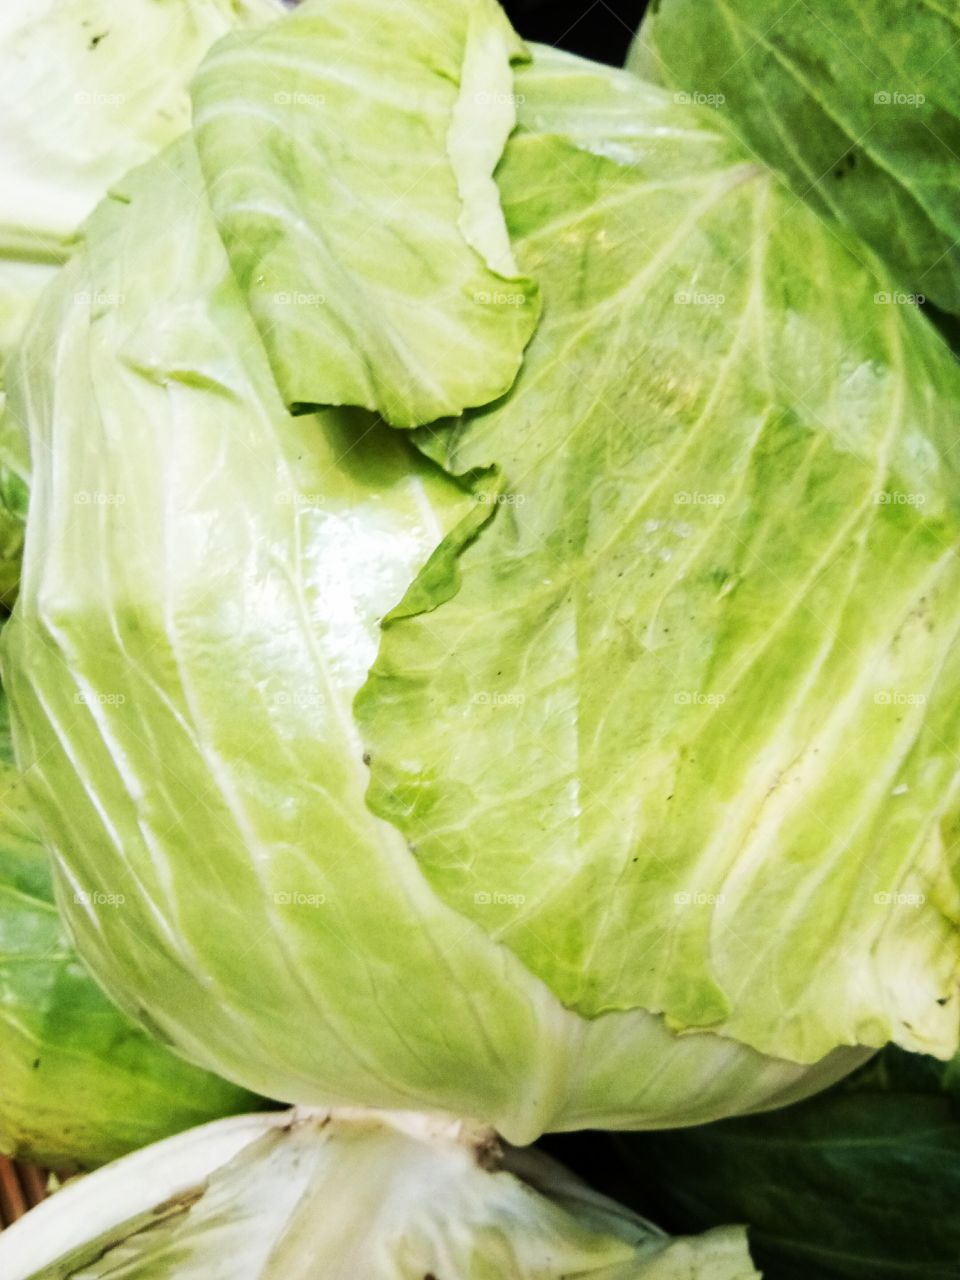 cabbage
vegetable
food